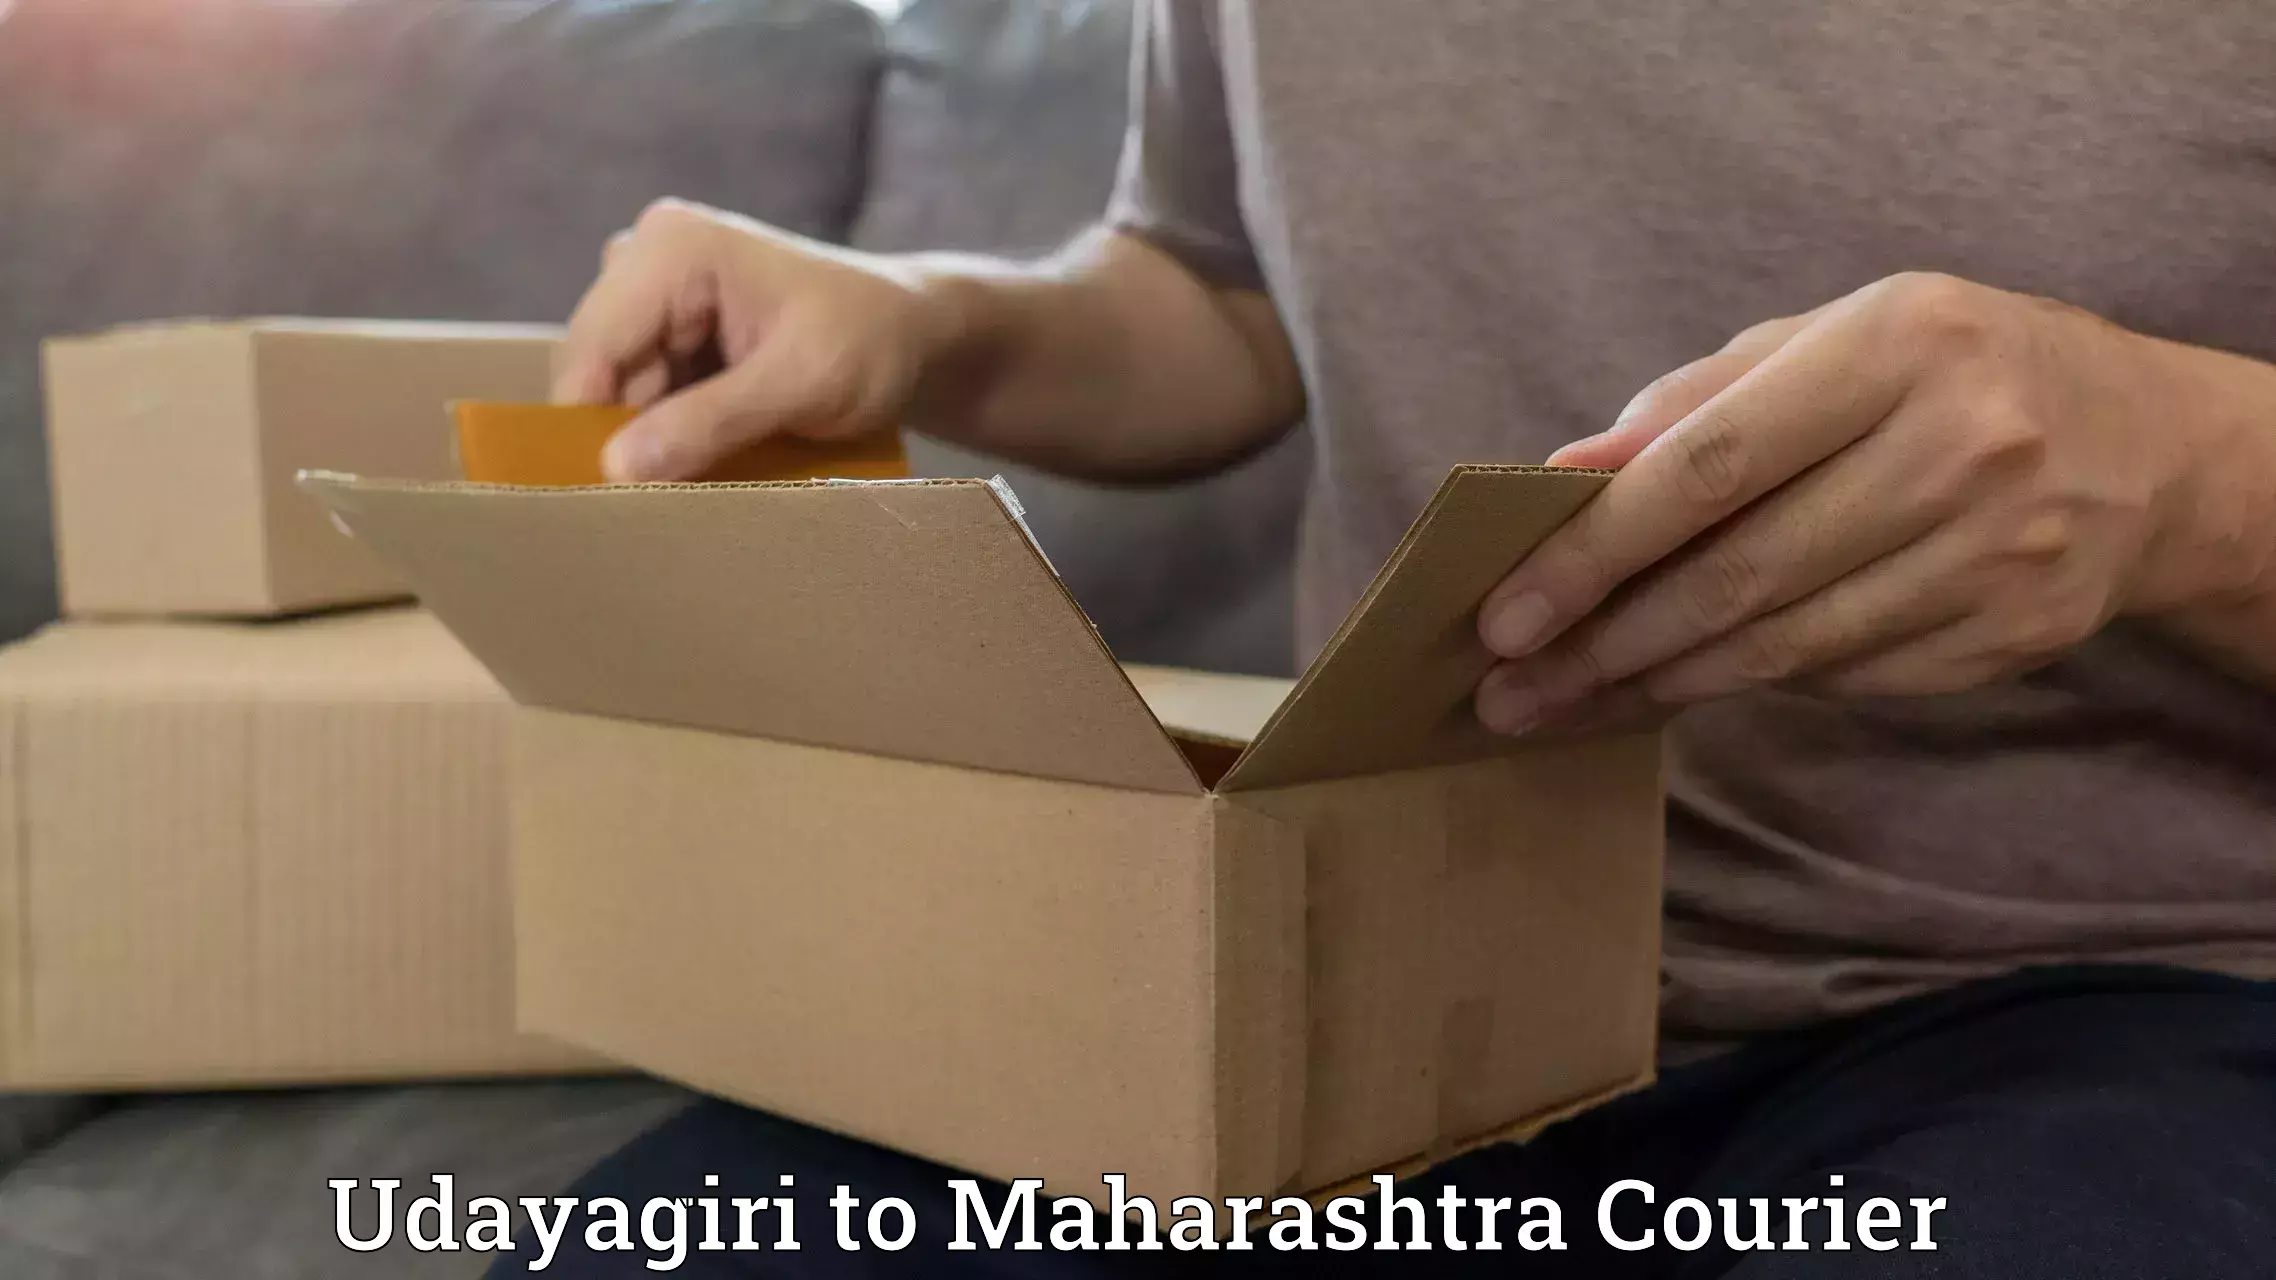 Courier service comparison Udayagiri to Mahabaleshwar